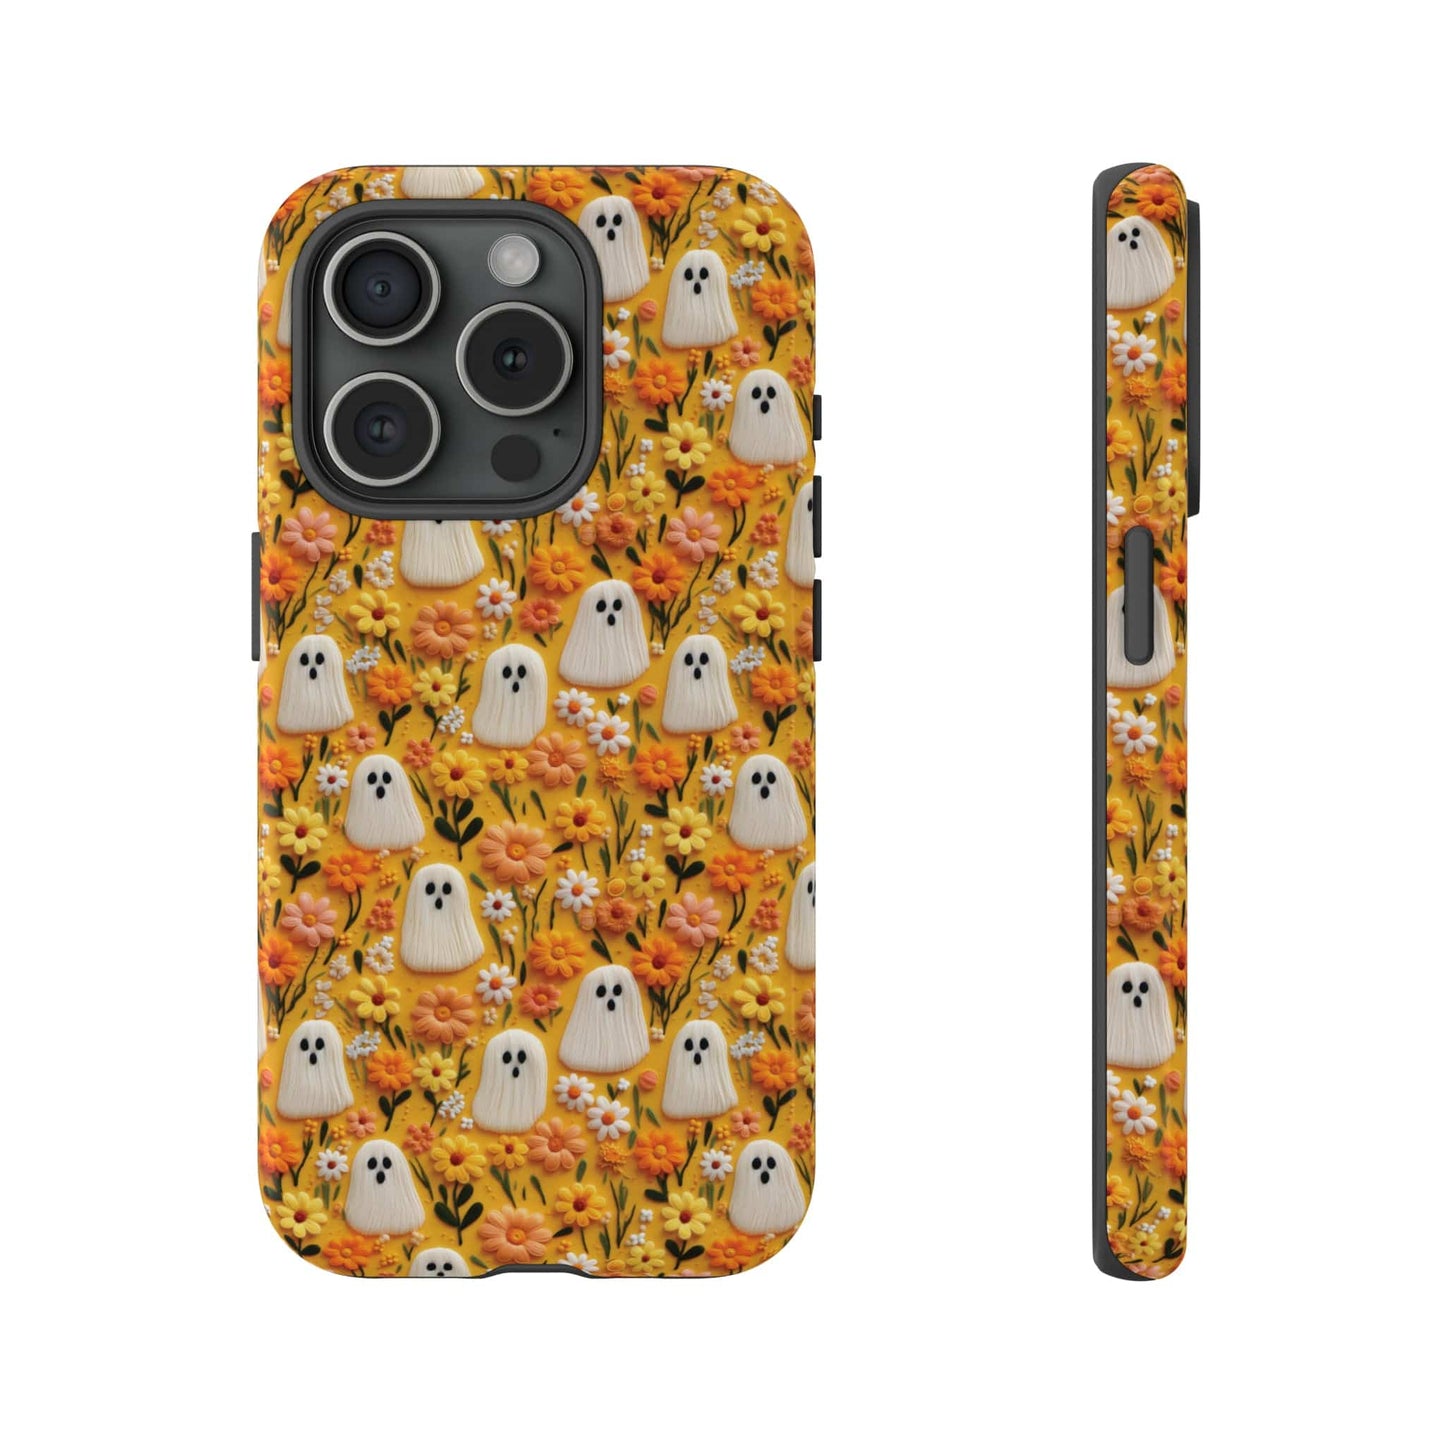 Autumn Ghost Impact Resistant Phone Case